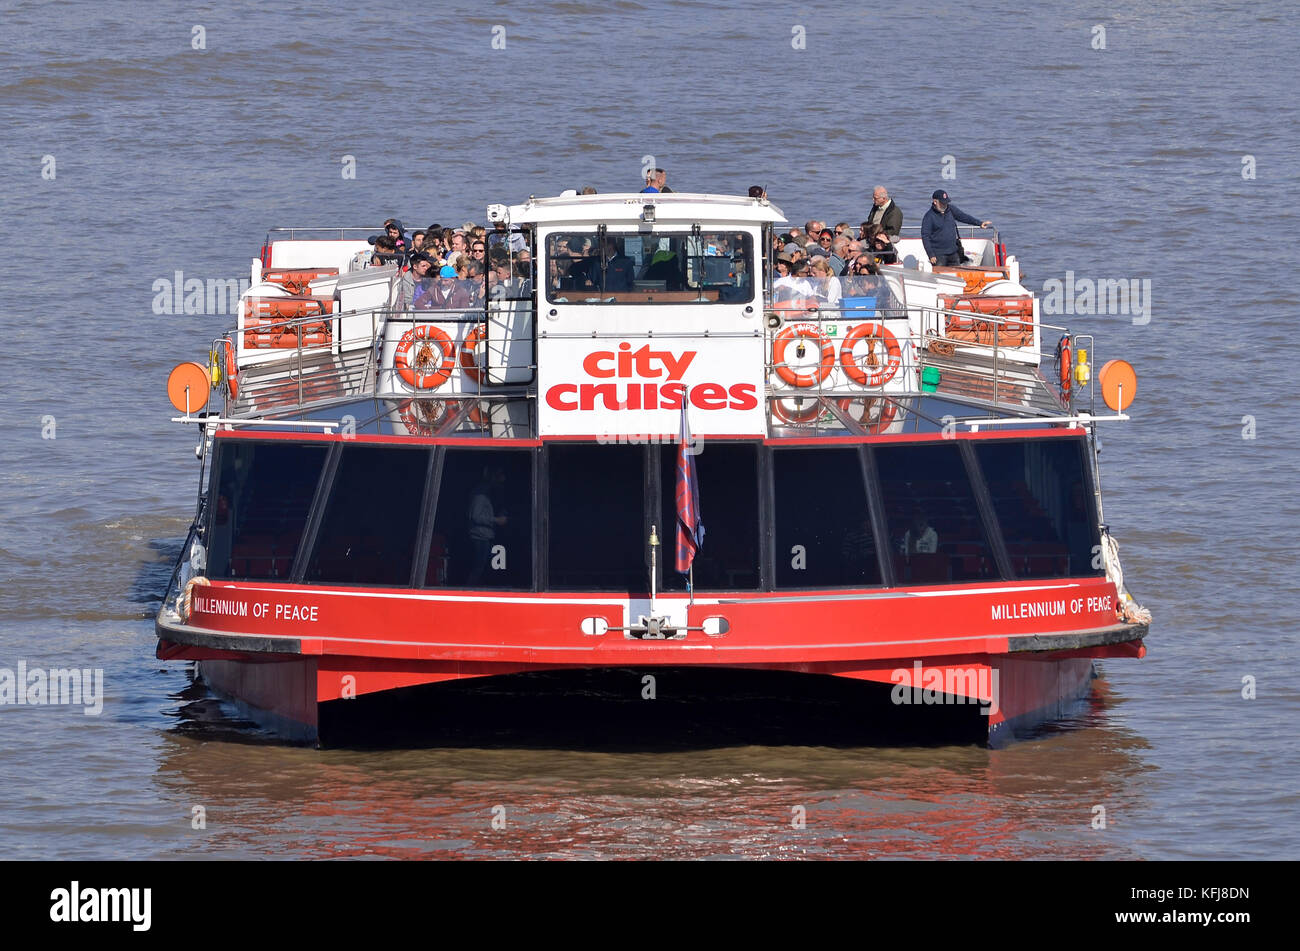 Millenium of Peace catamaran pleasure boat operated by Citycruises, River Thames, London, UK. Stock Photo